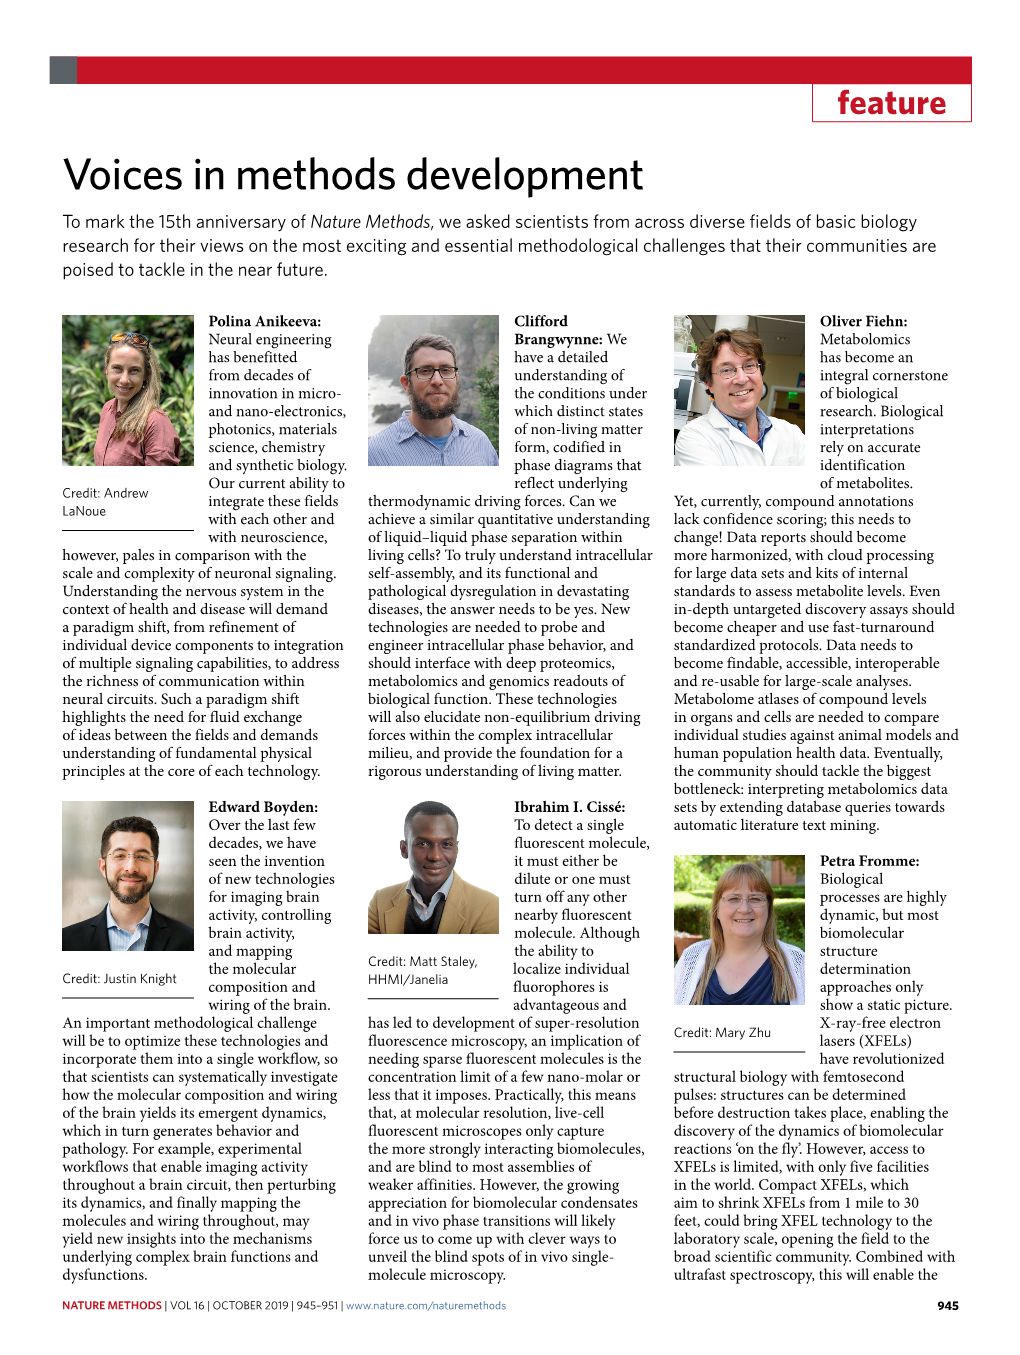 Voices in Methods Development